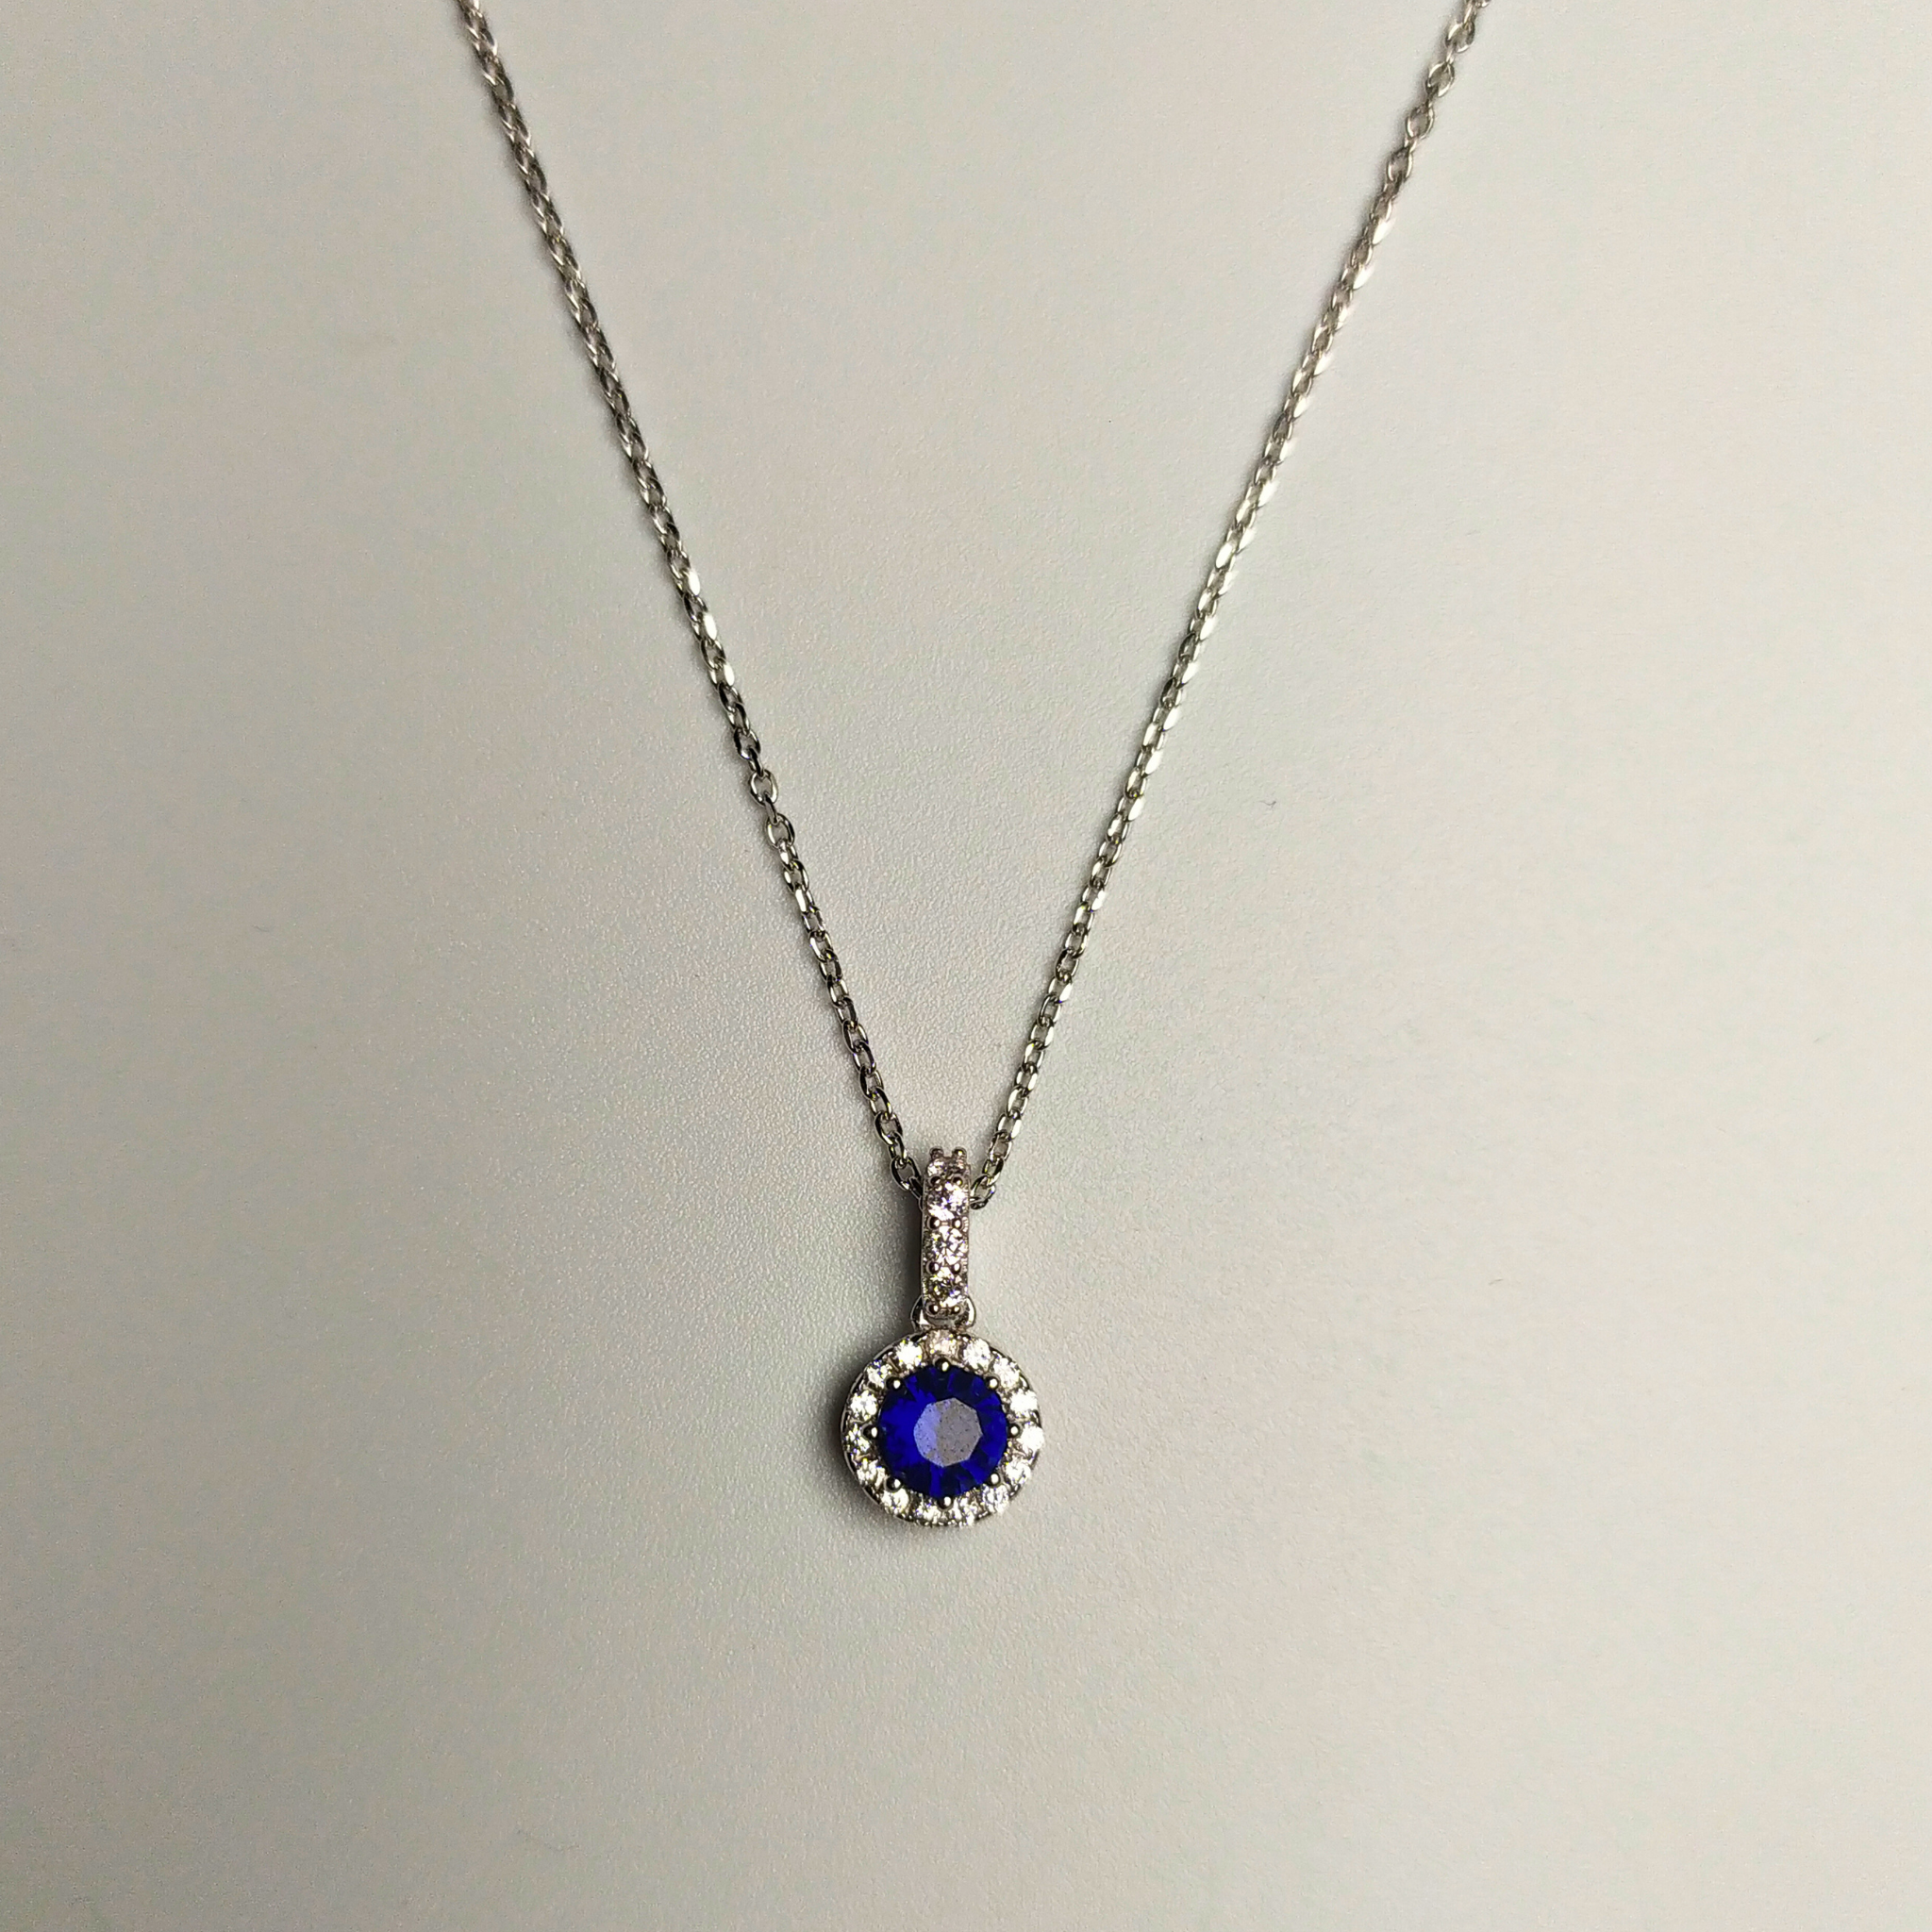 Pearls of Korea - Blue Lagoon Pendant - Sterling Silver 92.5